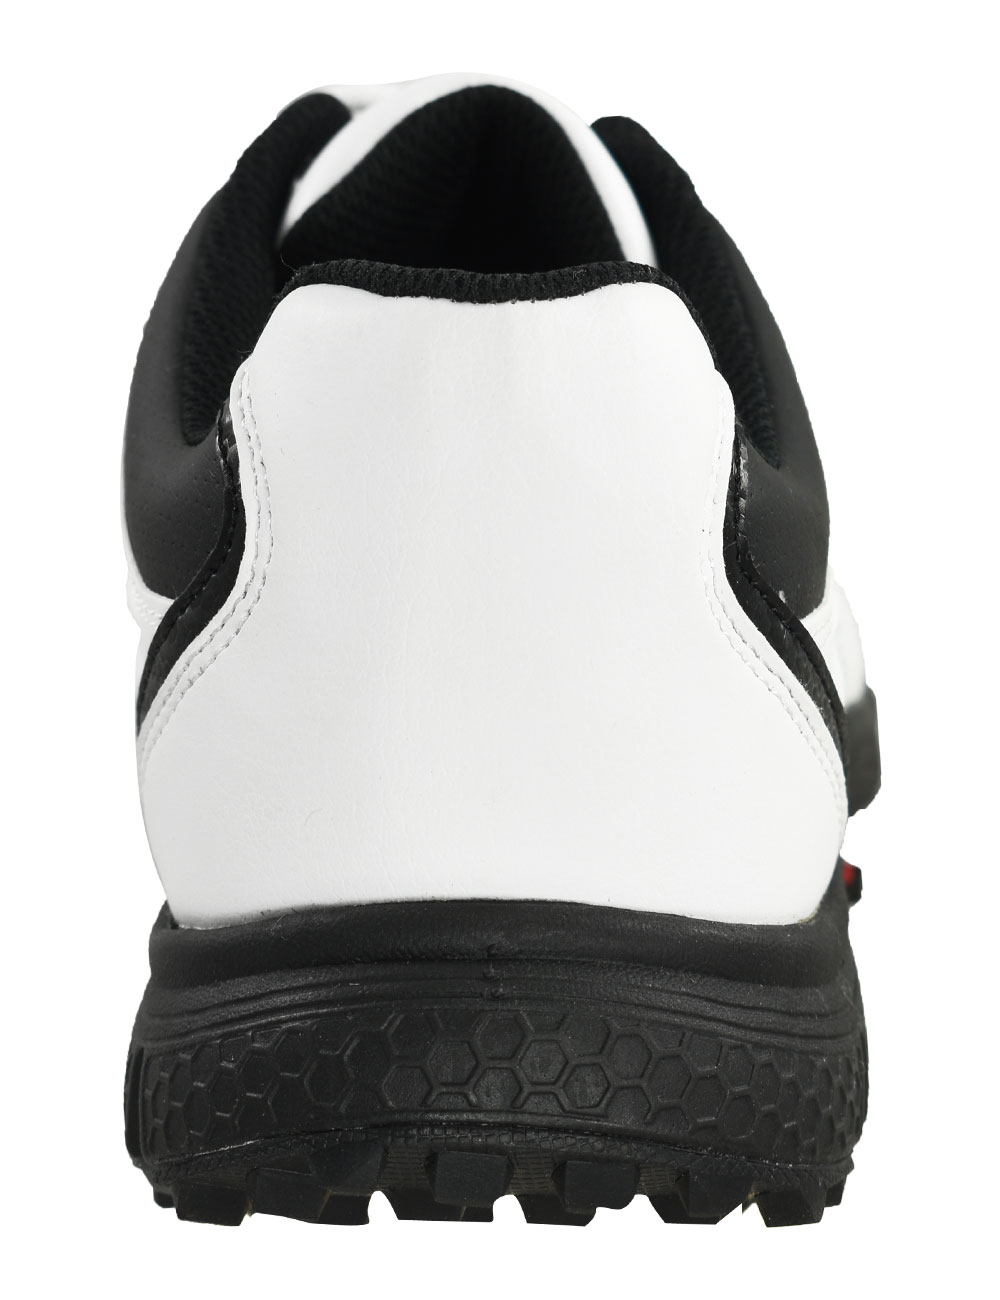 Etonic Men's Stabilite Golf Shoes - image 4 of 6